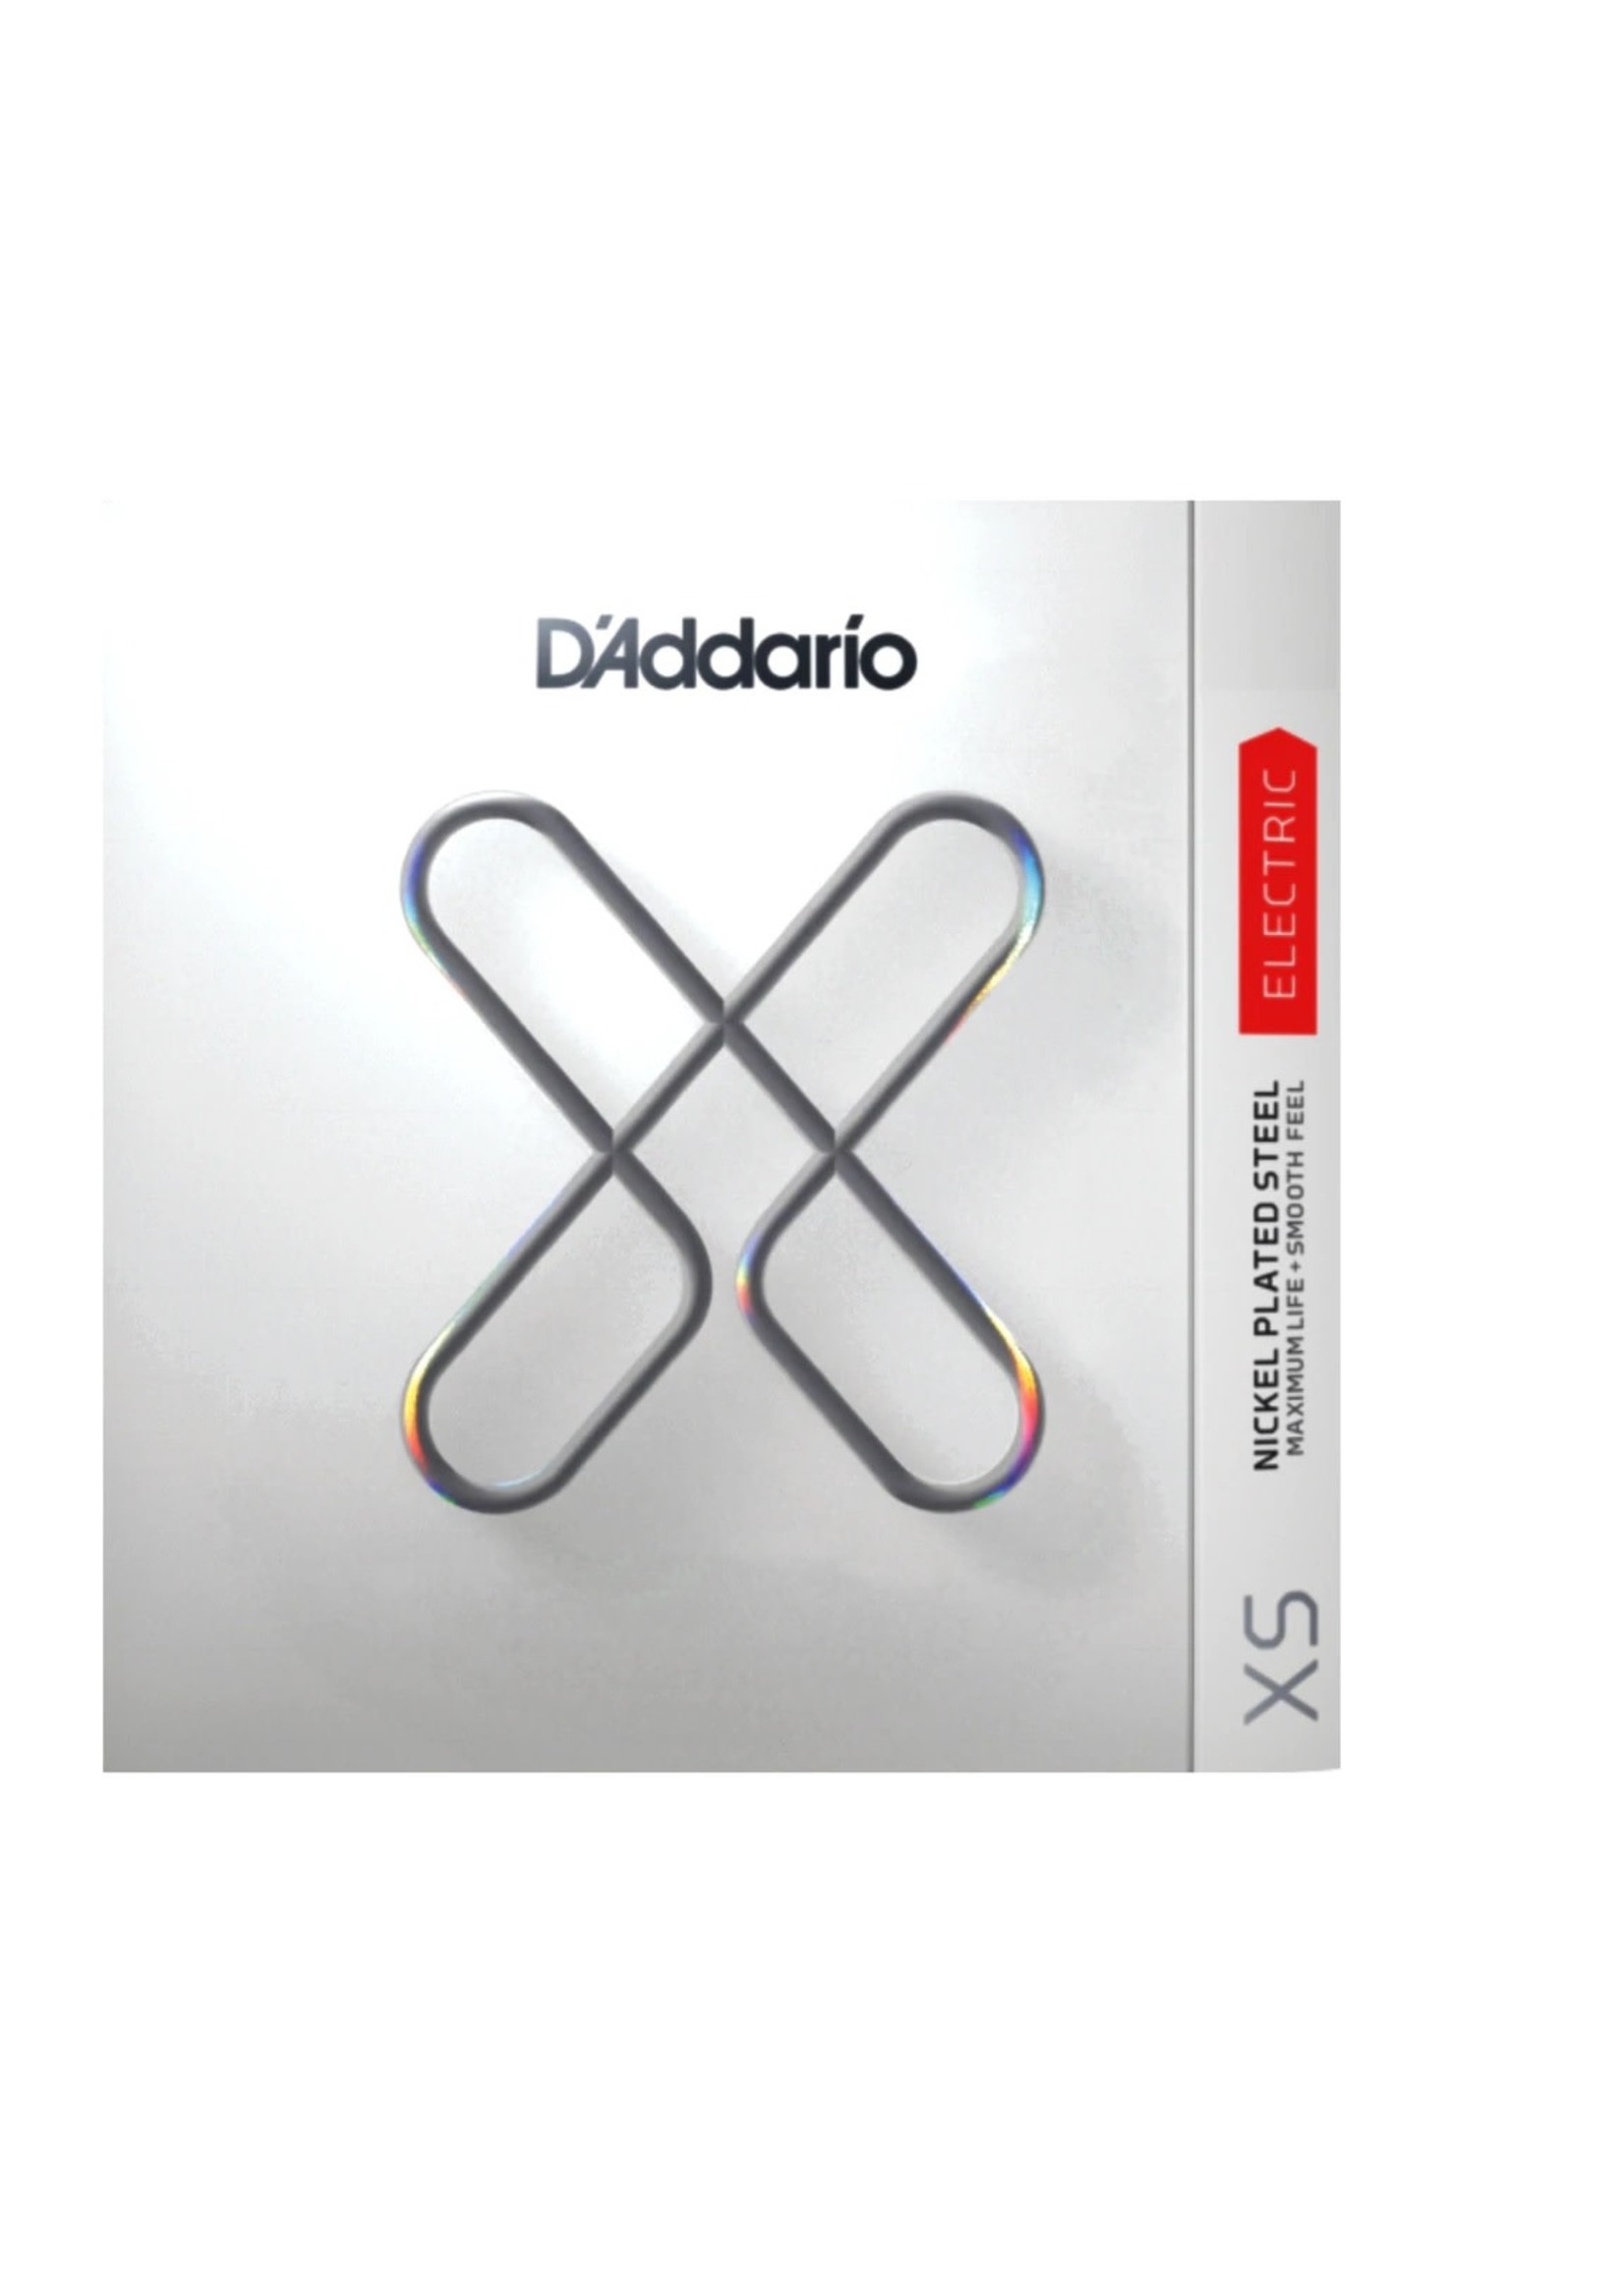 D'Addario D'Addario Electric Guitar Strings XS NPS SUP Light XSE0942